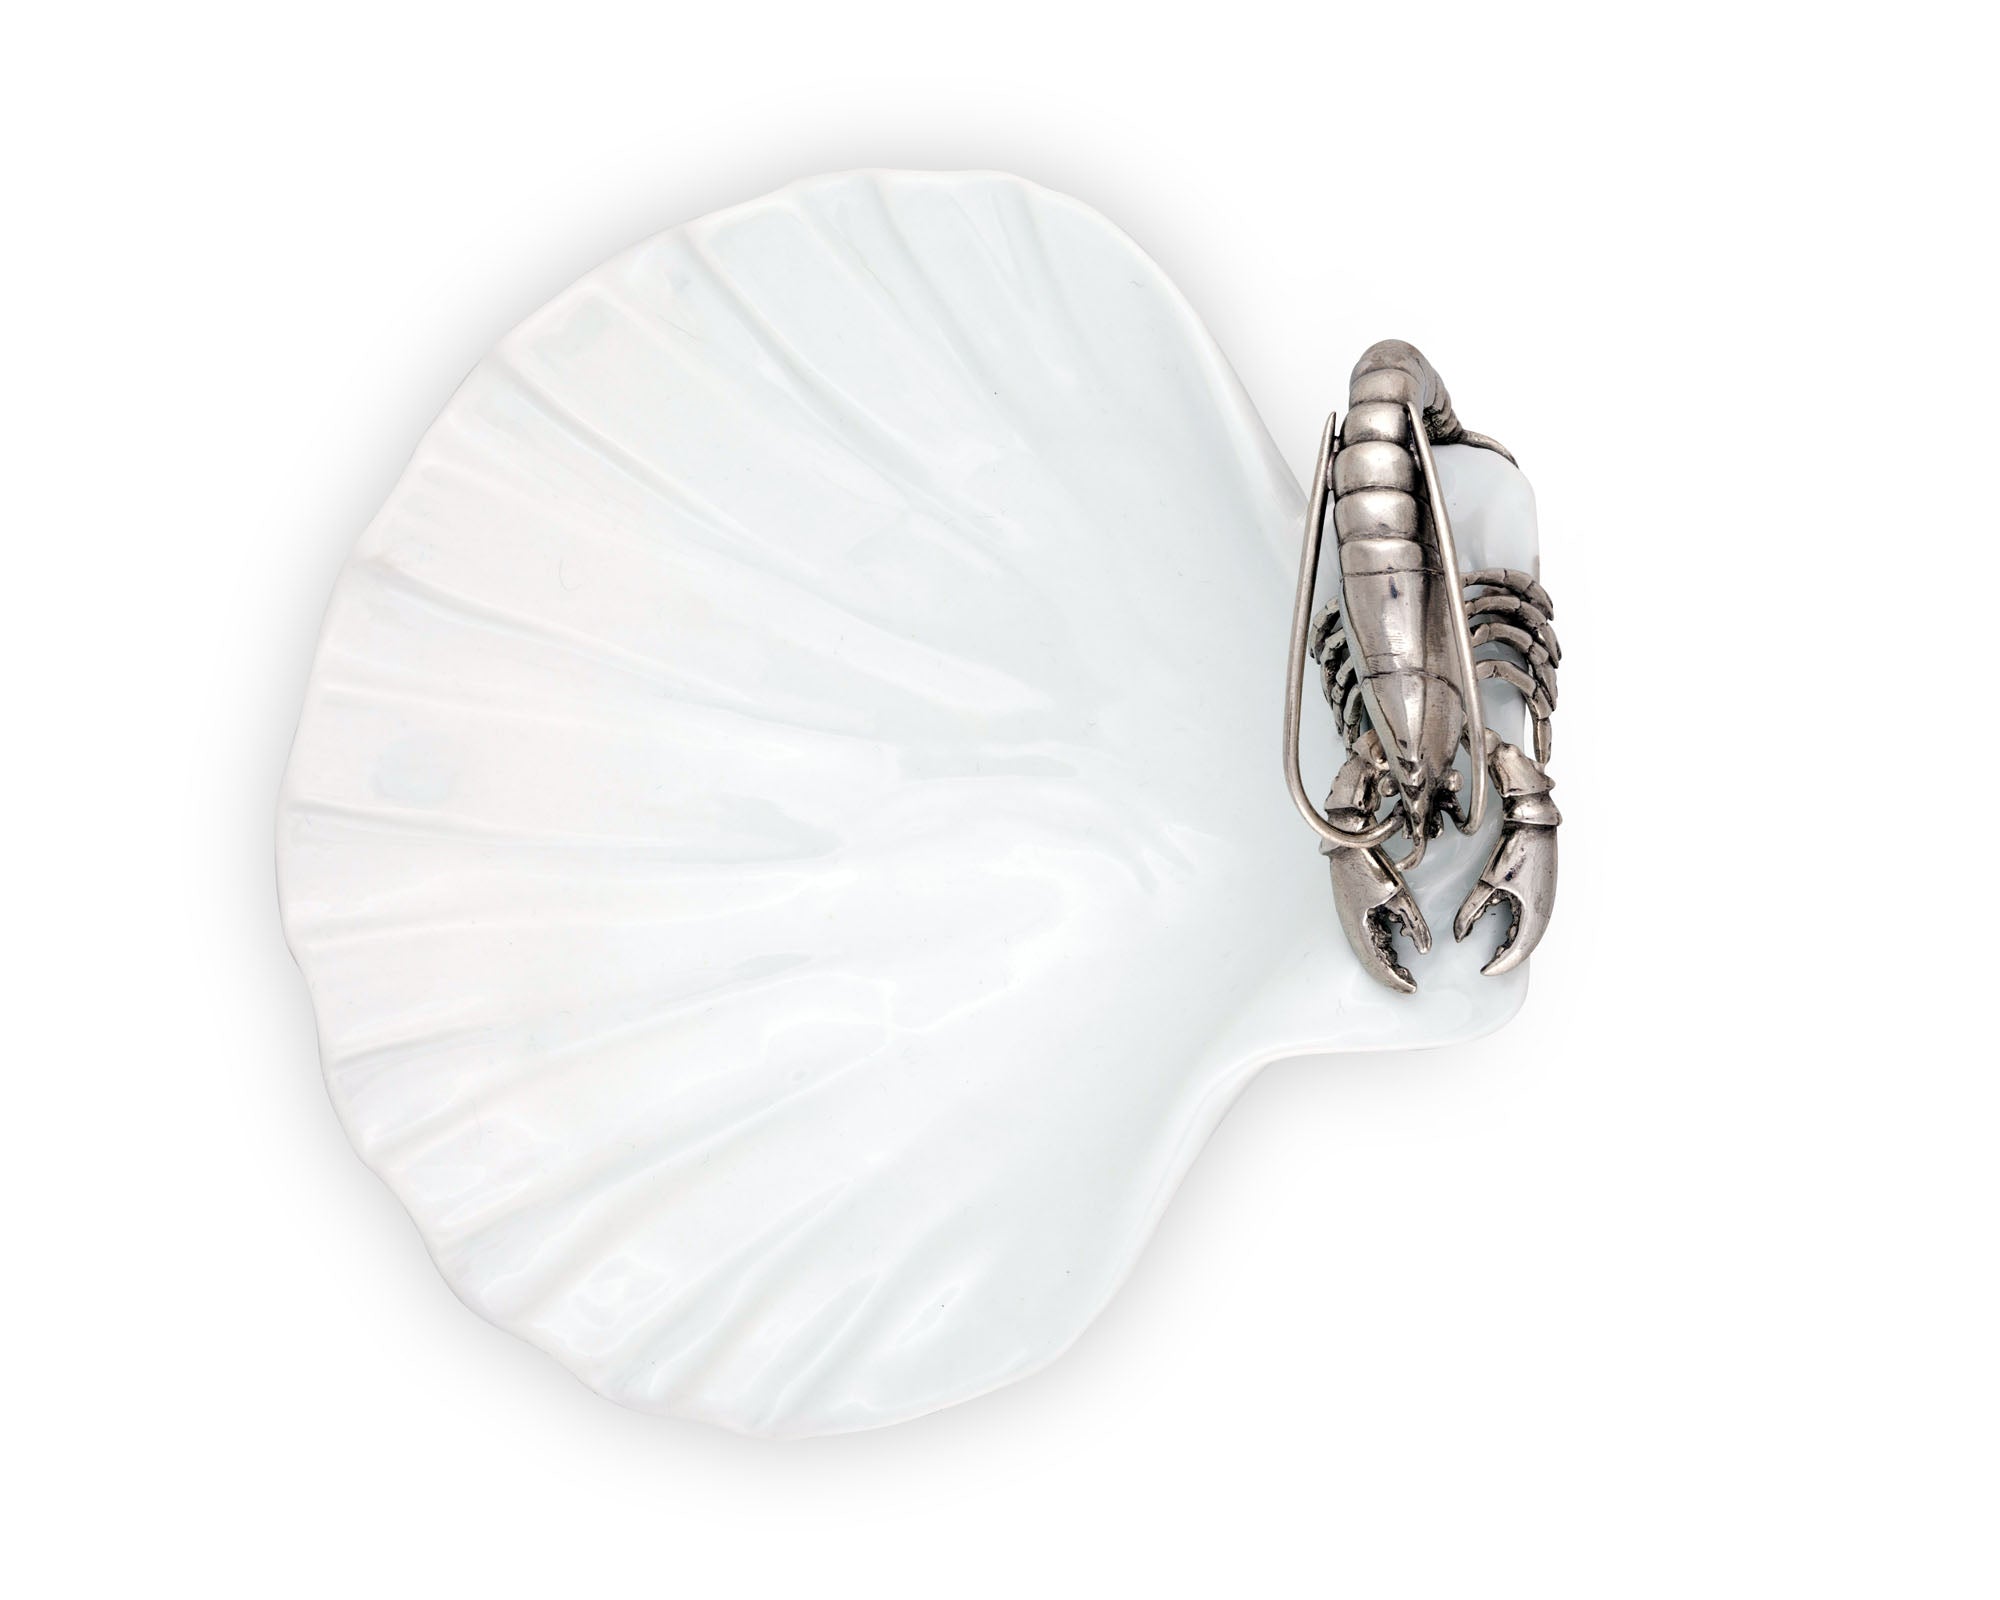 Vagabond House Shrimp Porcelain Shell Plate Product Image